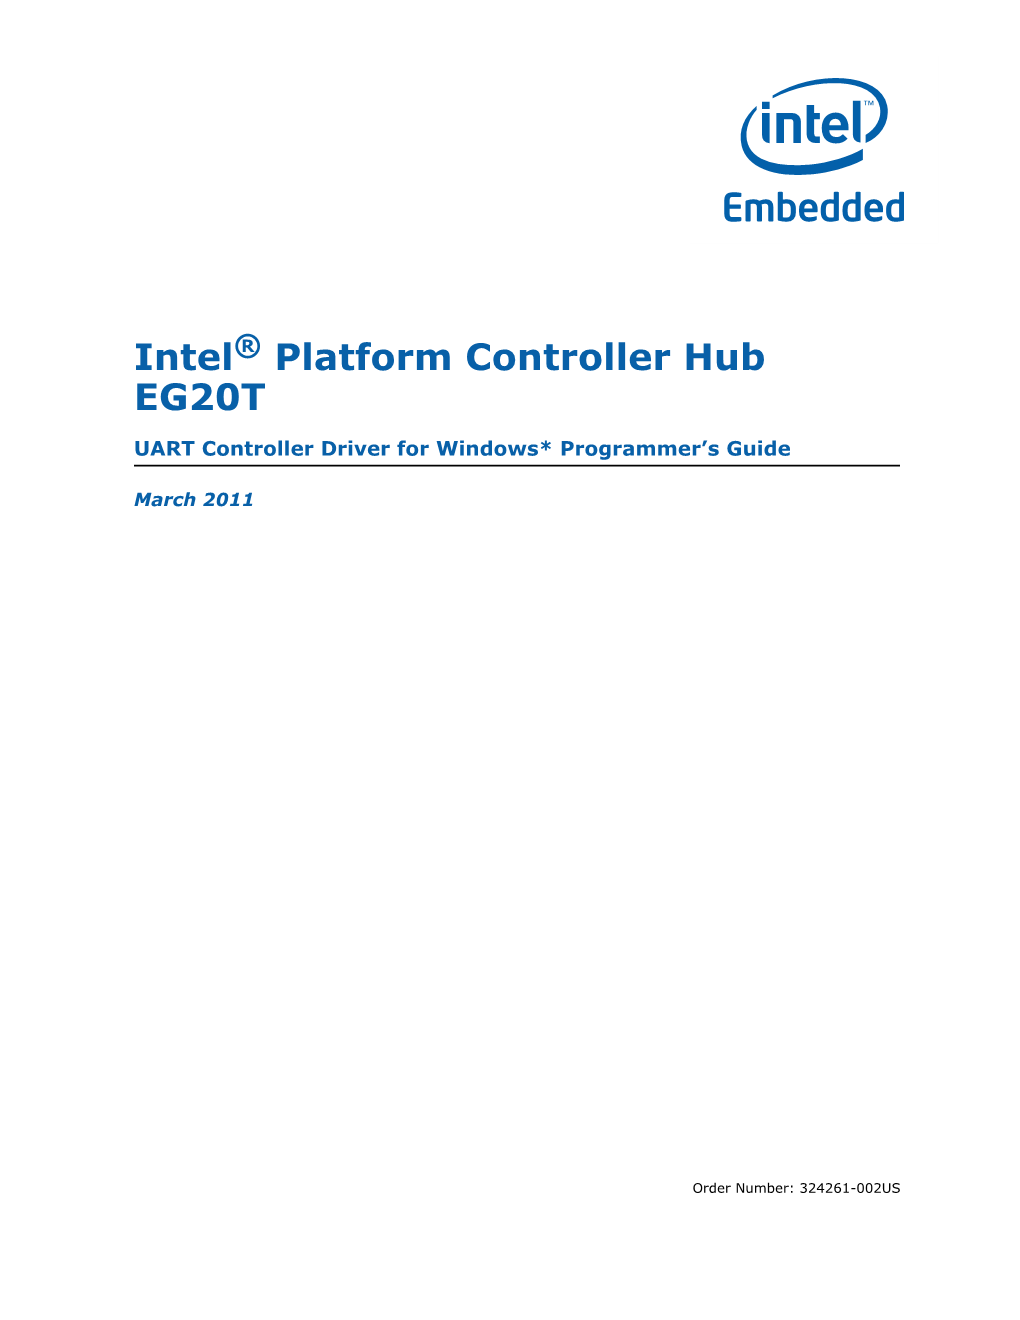 Intel(R) Platform Controller Hub EG20T UART Controller Driver for Windows* Programmer's Guide